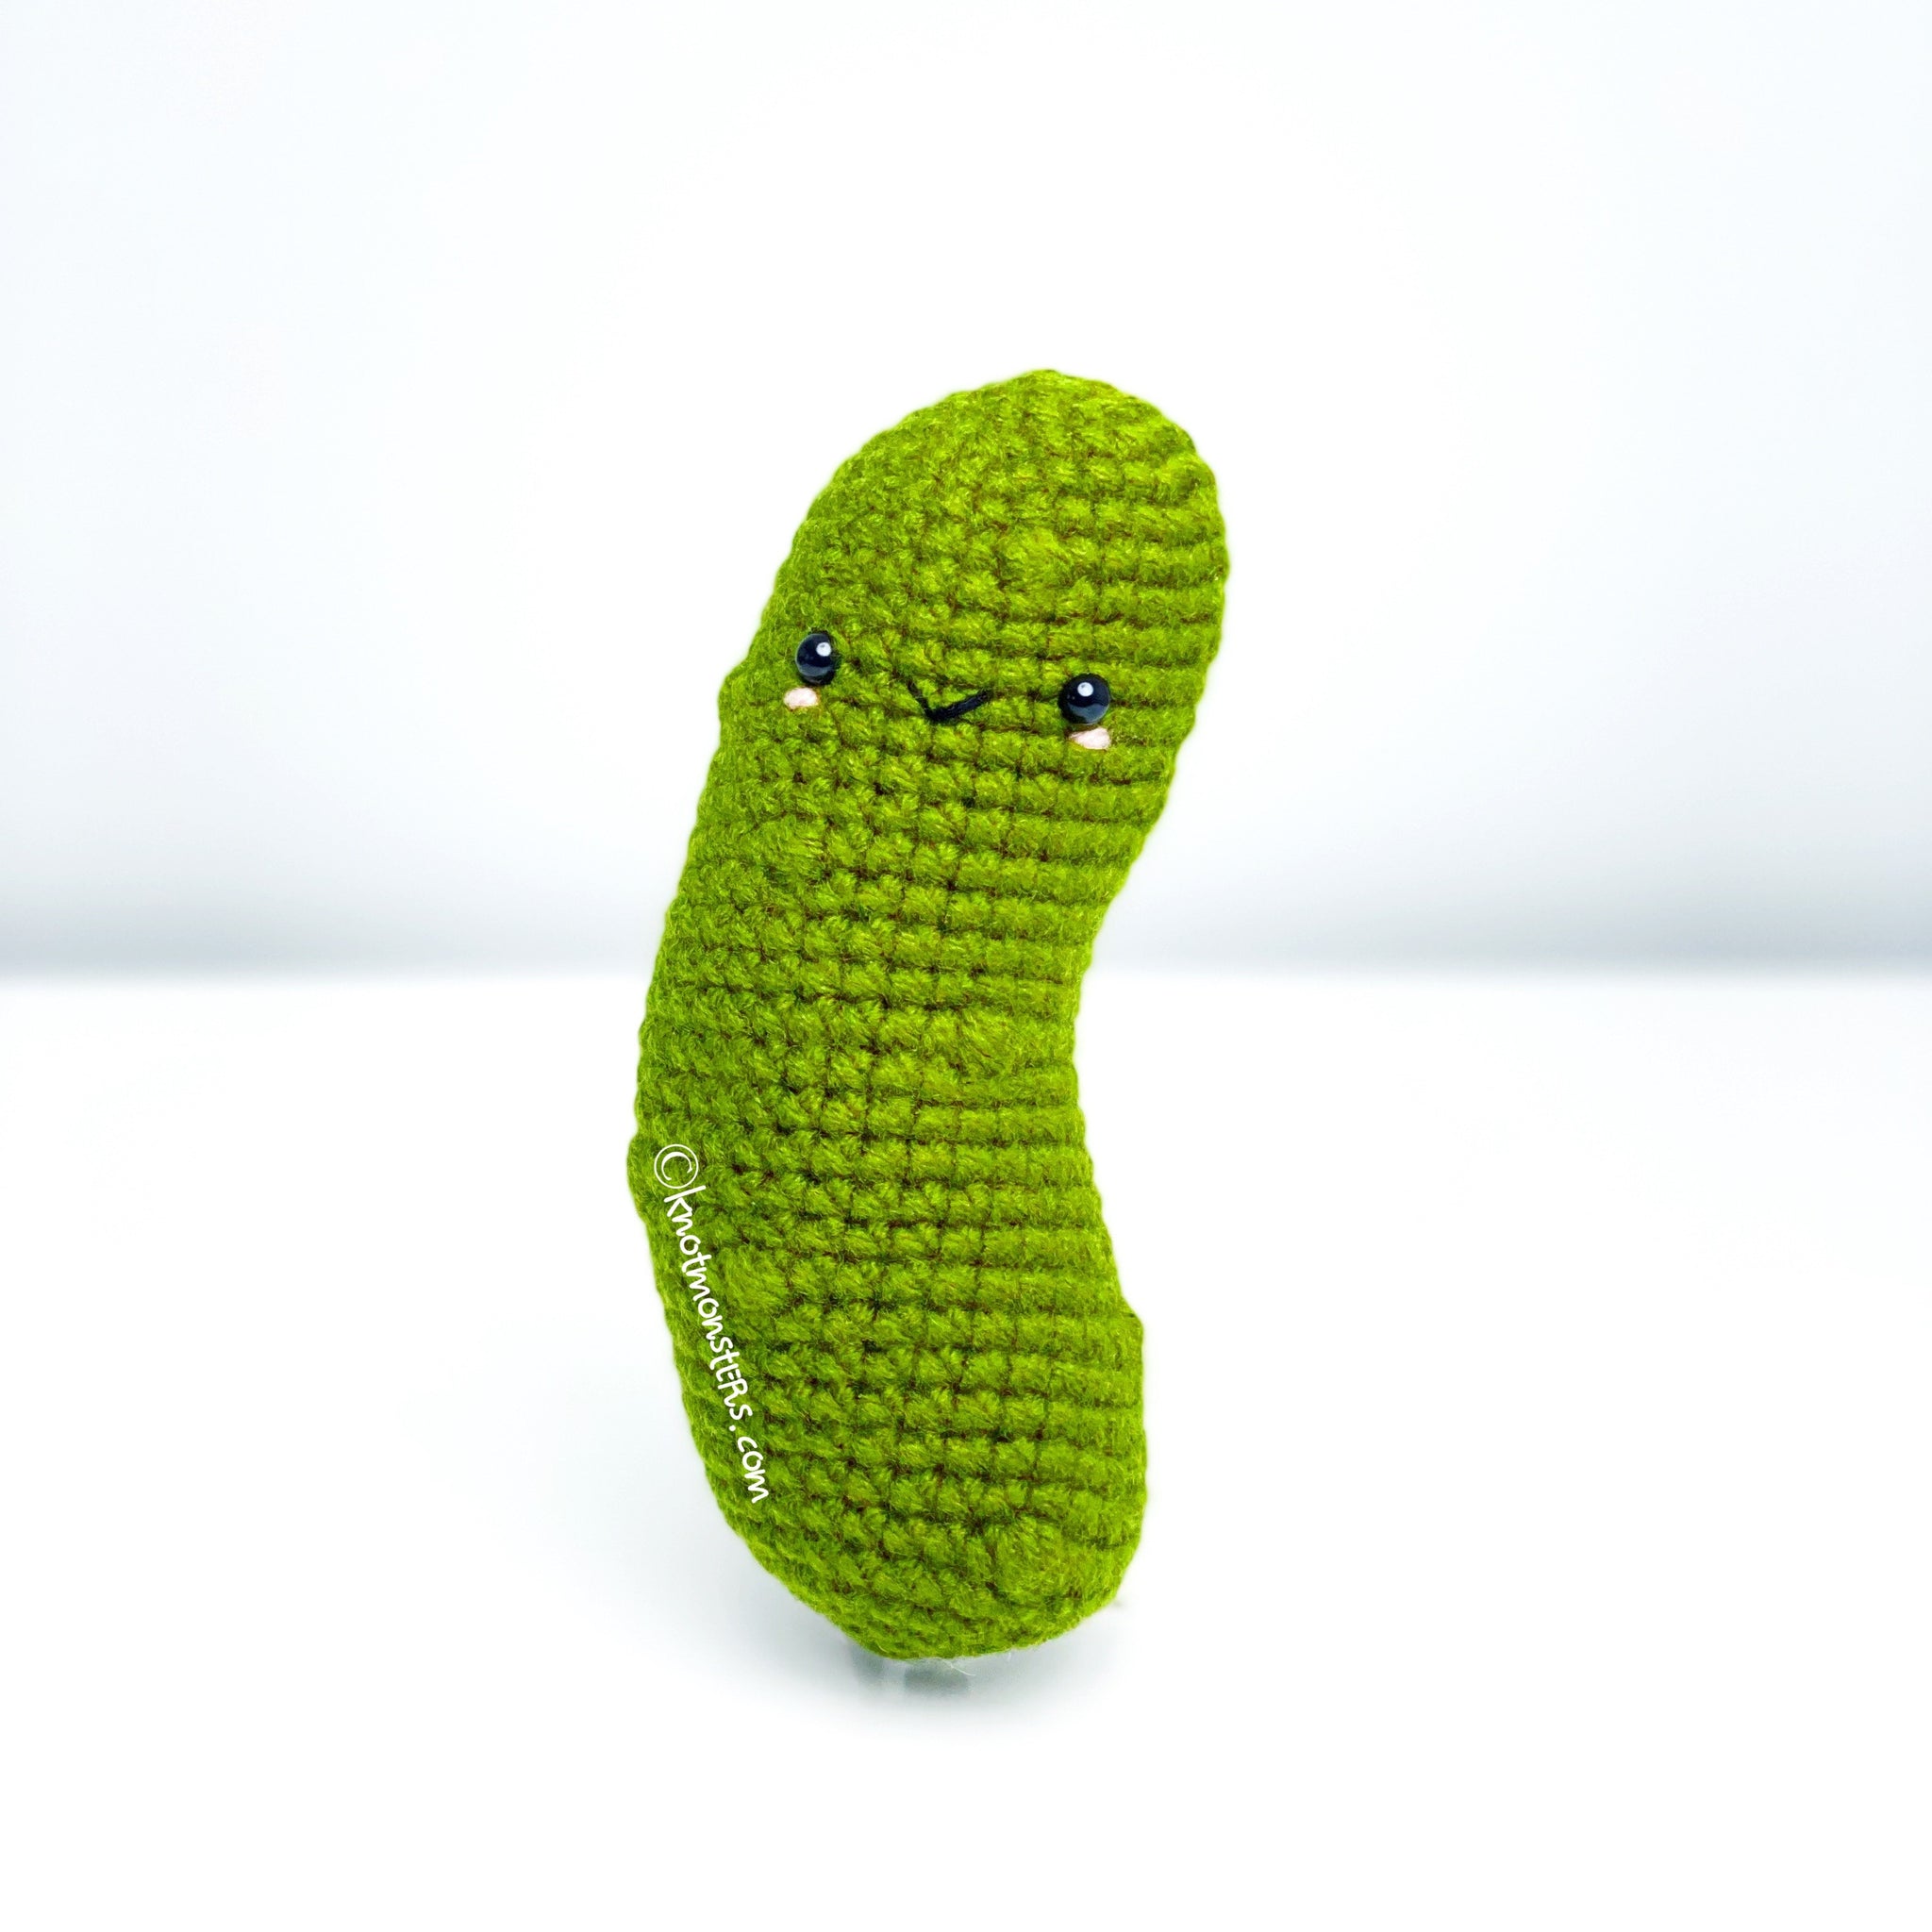 Pickle Cucumber - Vegetables (DIGITAL PATTERN)